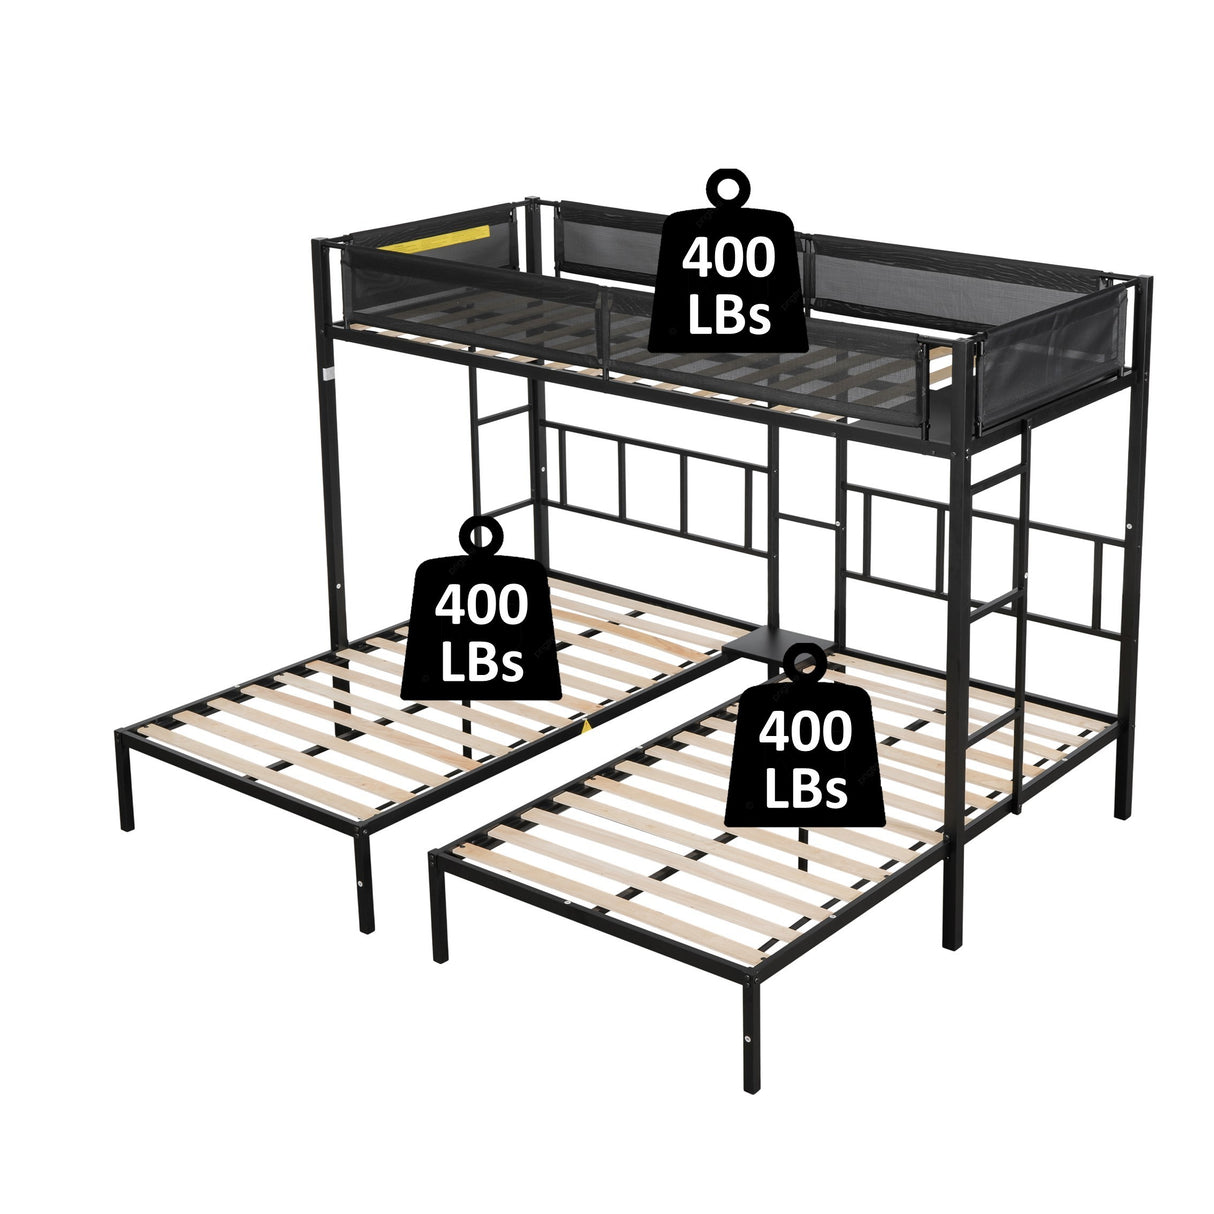 Triple twin bunk bed (Wood Slat and Textilene Guardrail) - Home Elegance USA